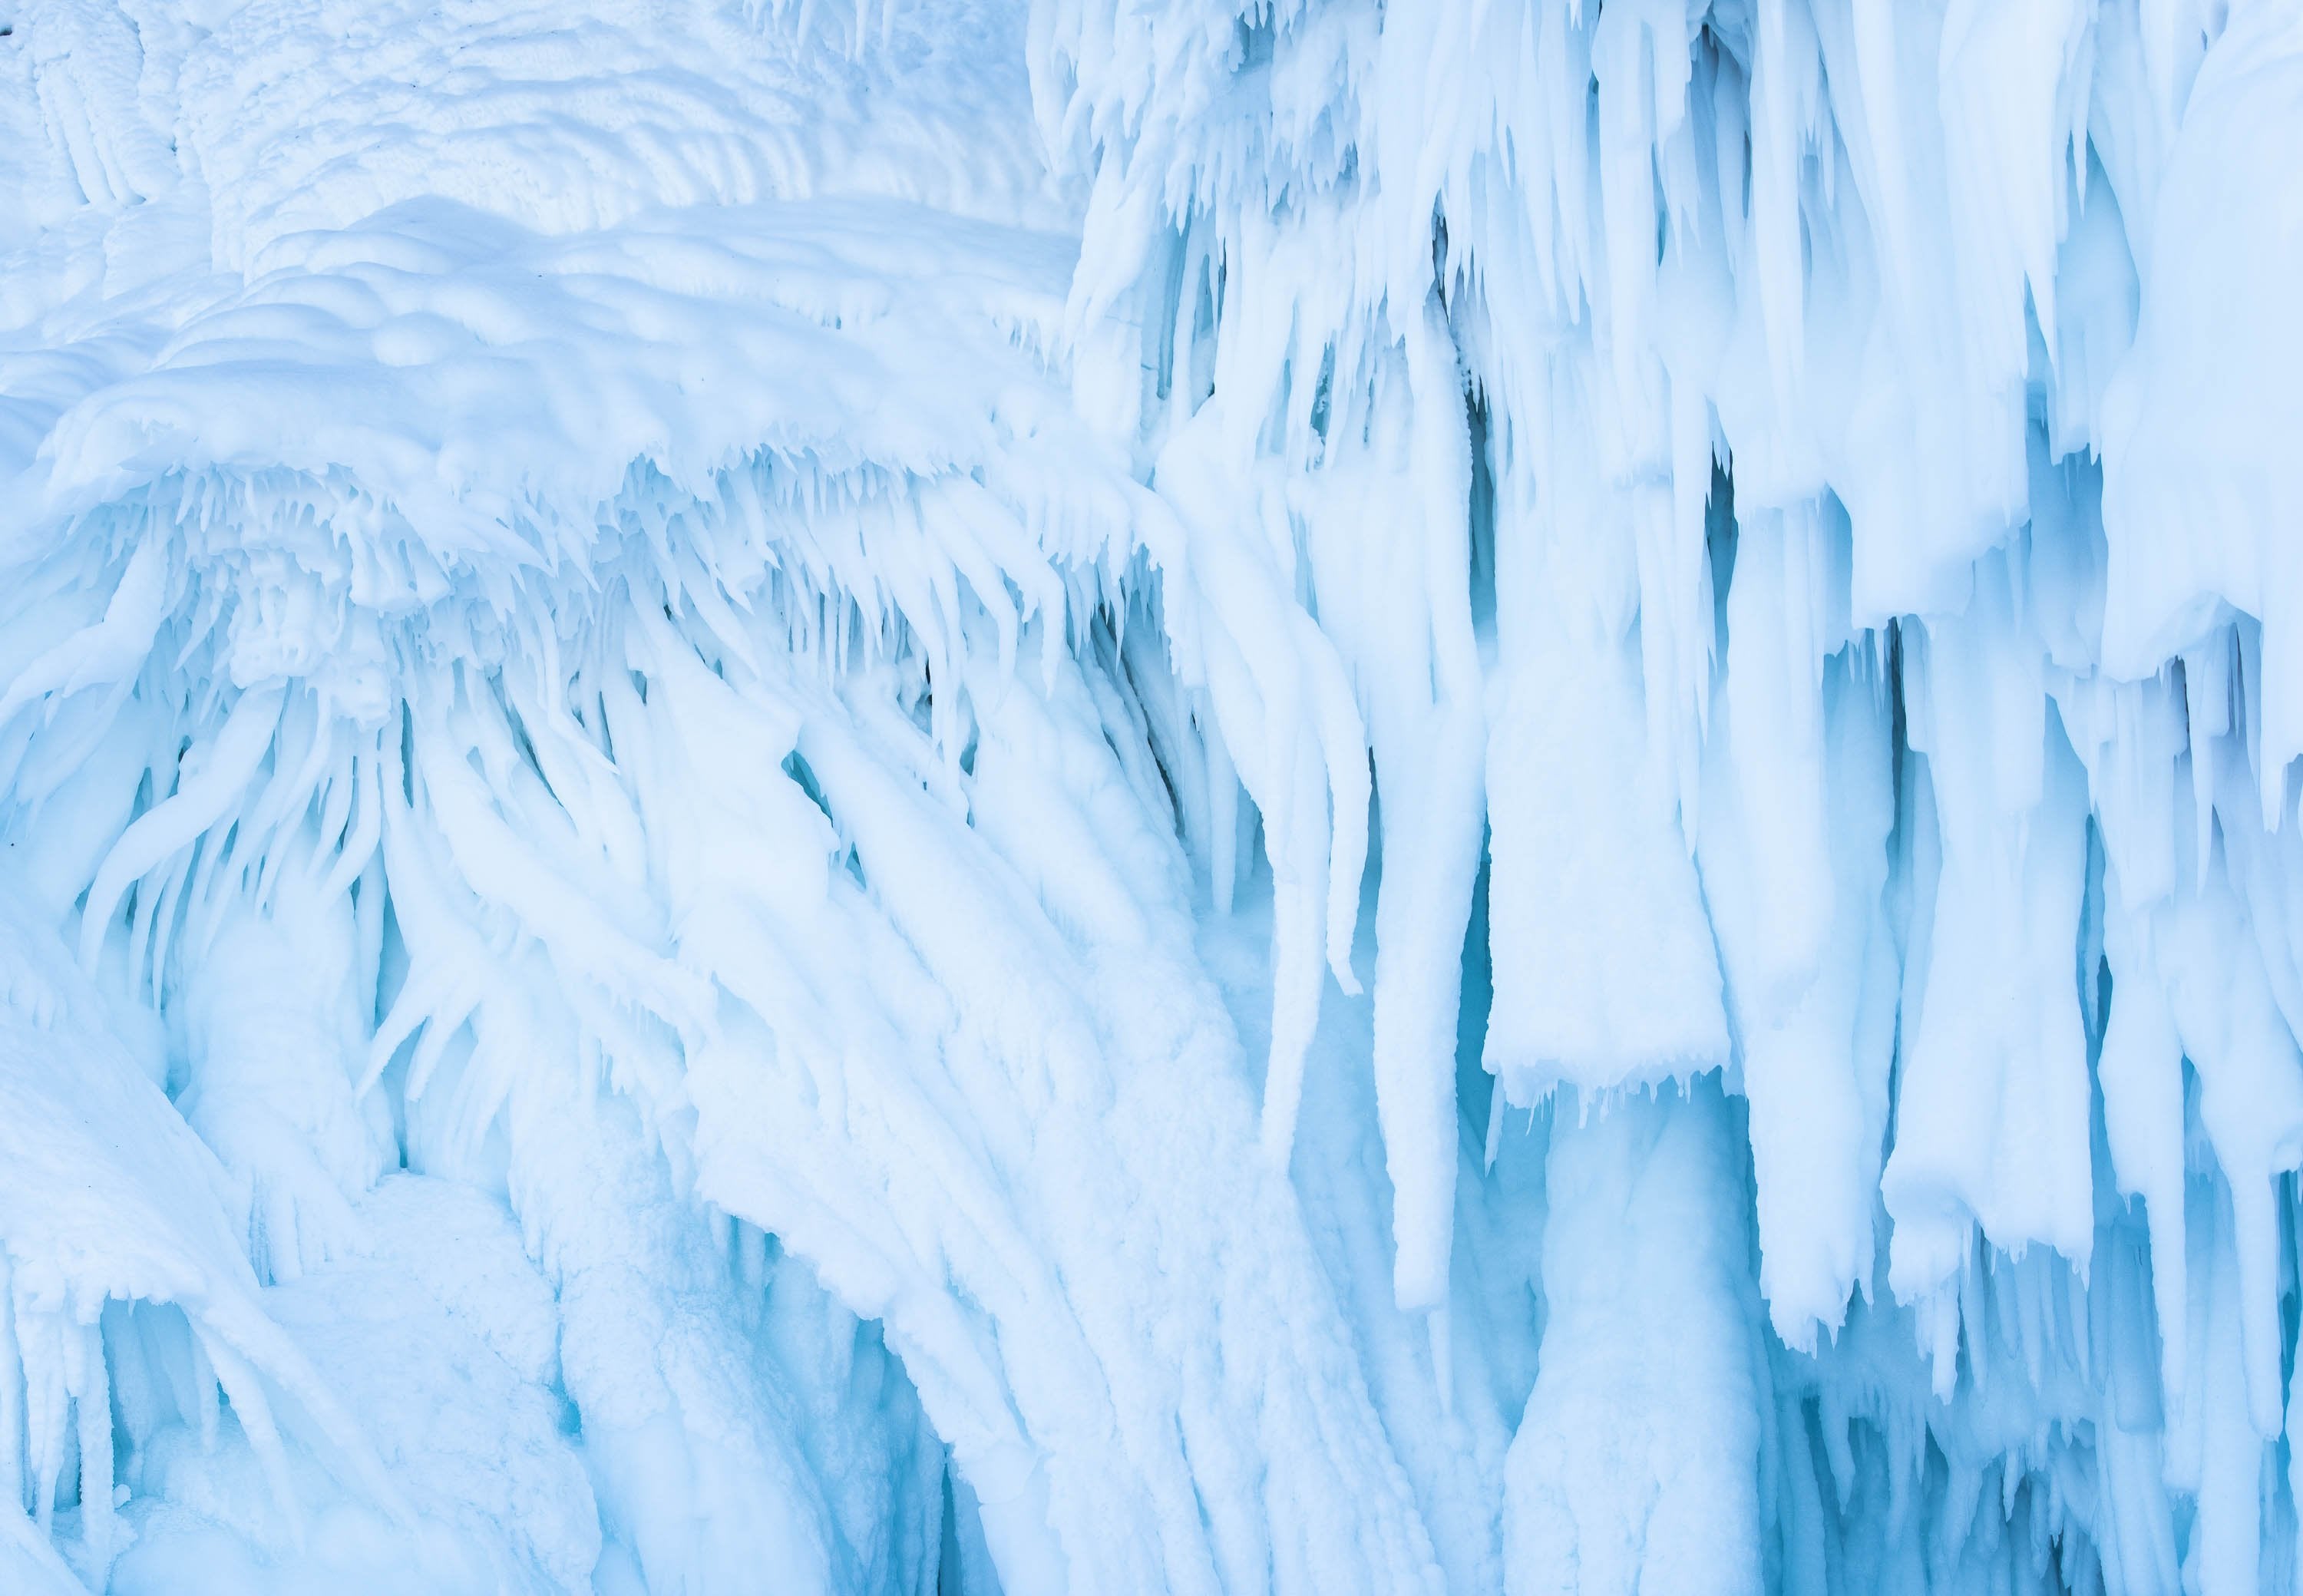 Ice-blue colored frozen surface, Lake Baikal #5, Siberia, Russia